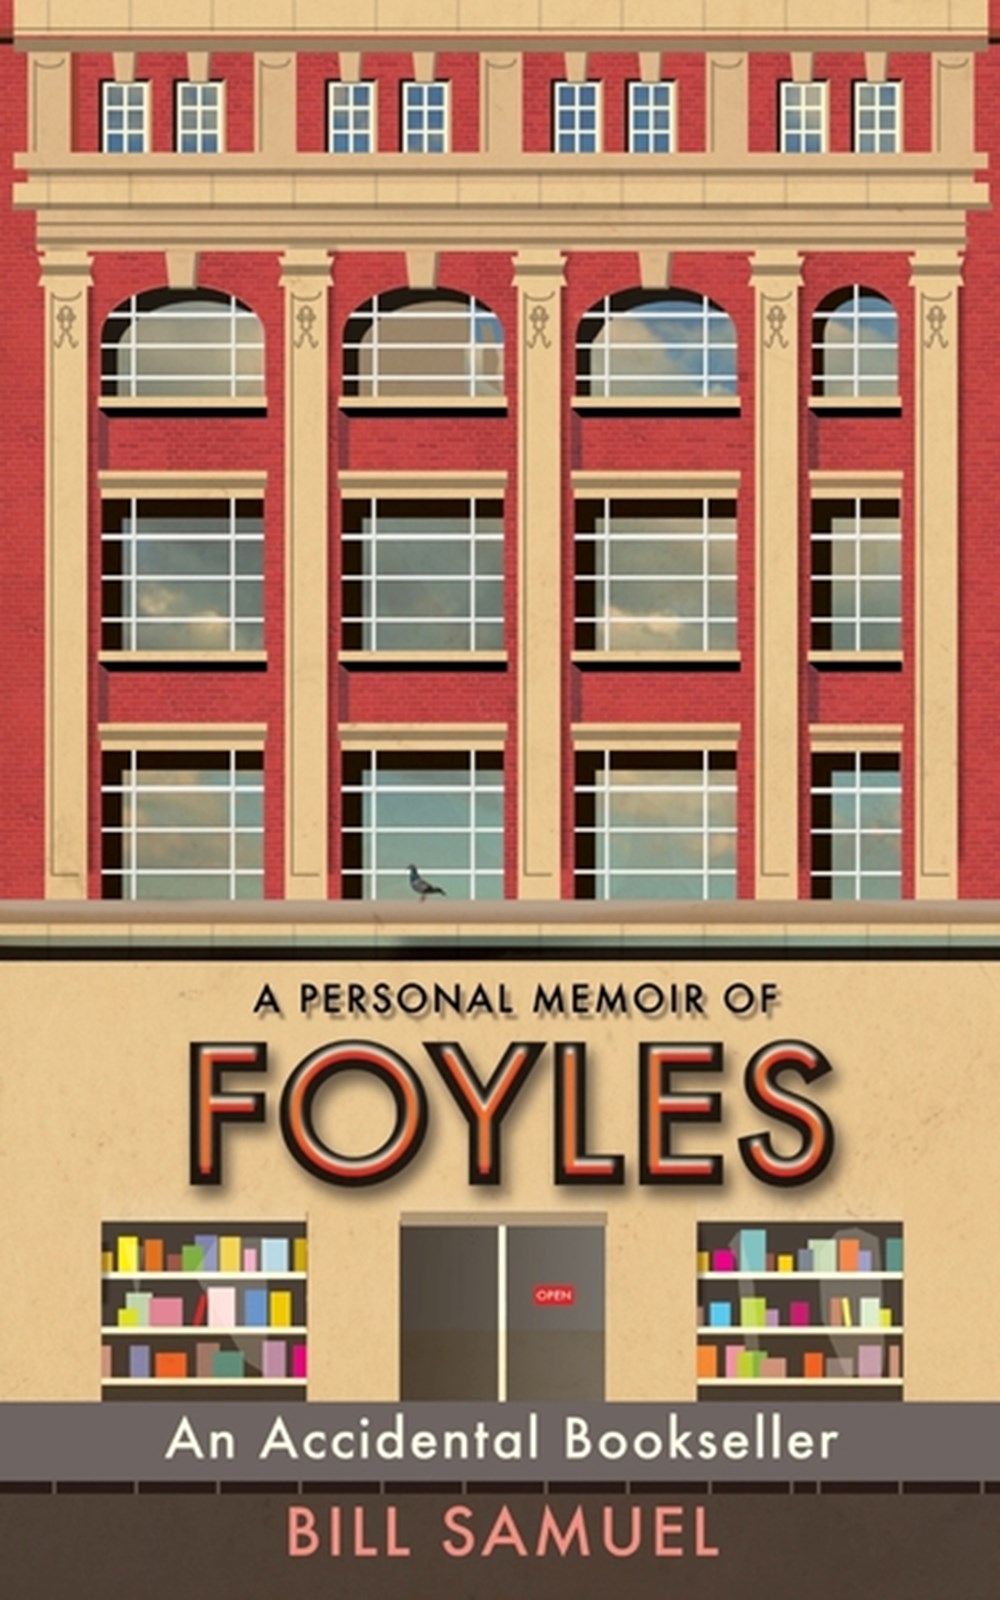 Accidental Bookseller A Personal Memoir of Foyles